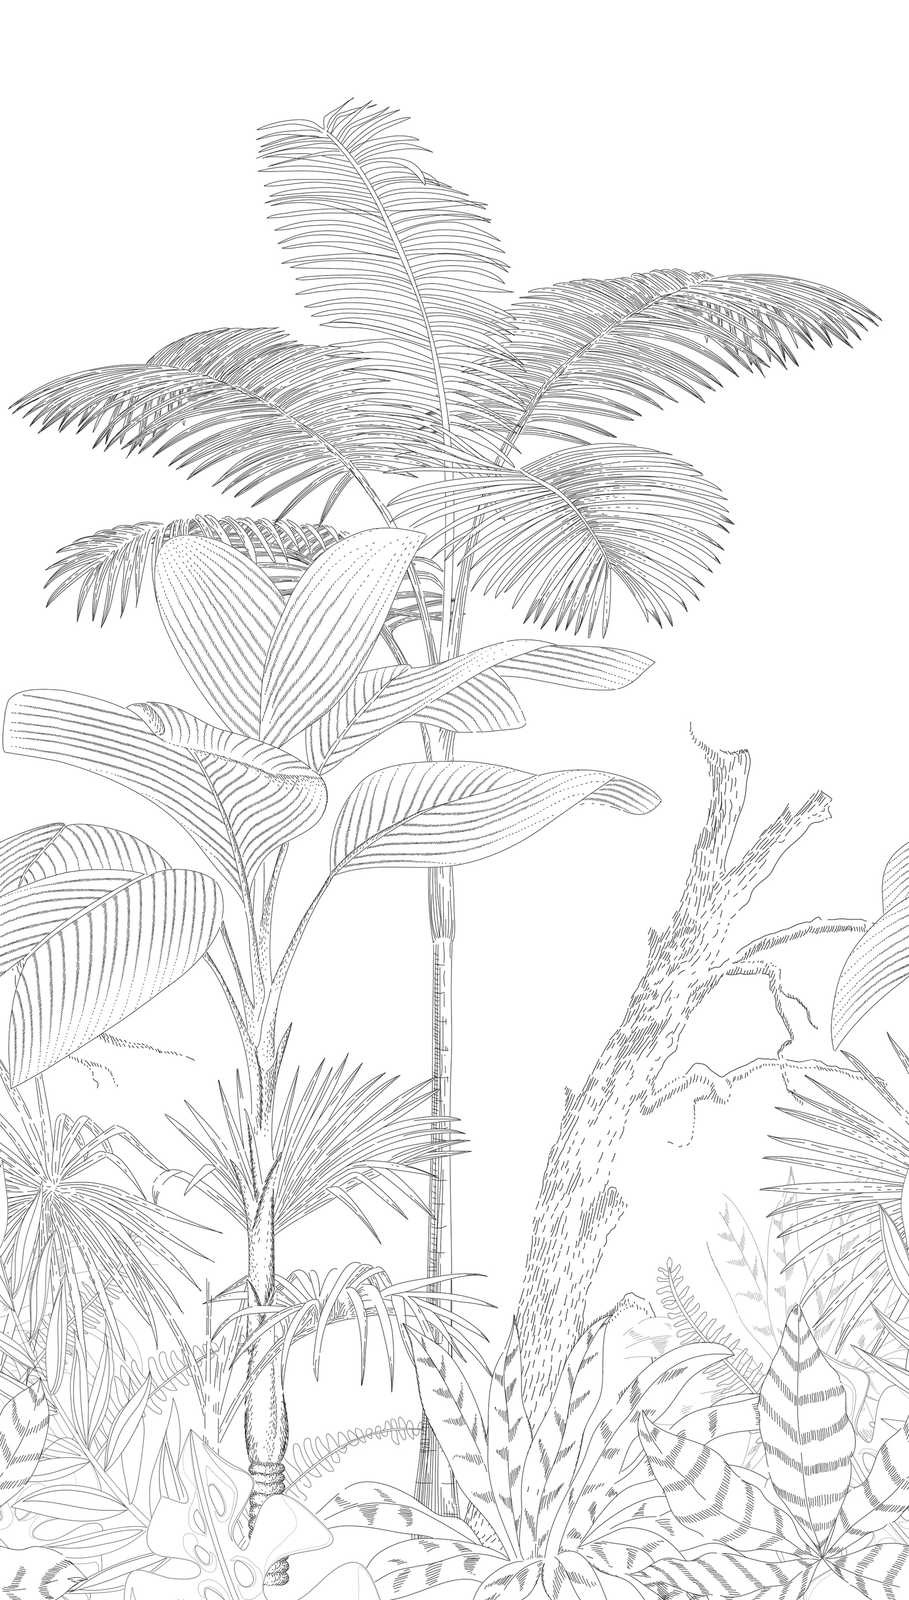             Papel pintado no tejido con motivo de jungla dibujada - blanco, negro
        